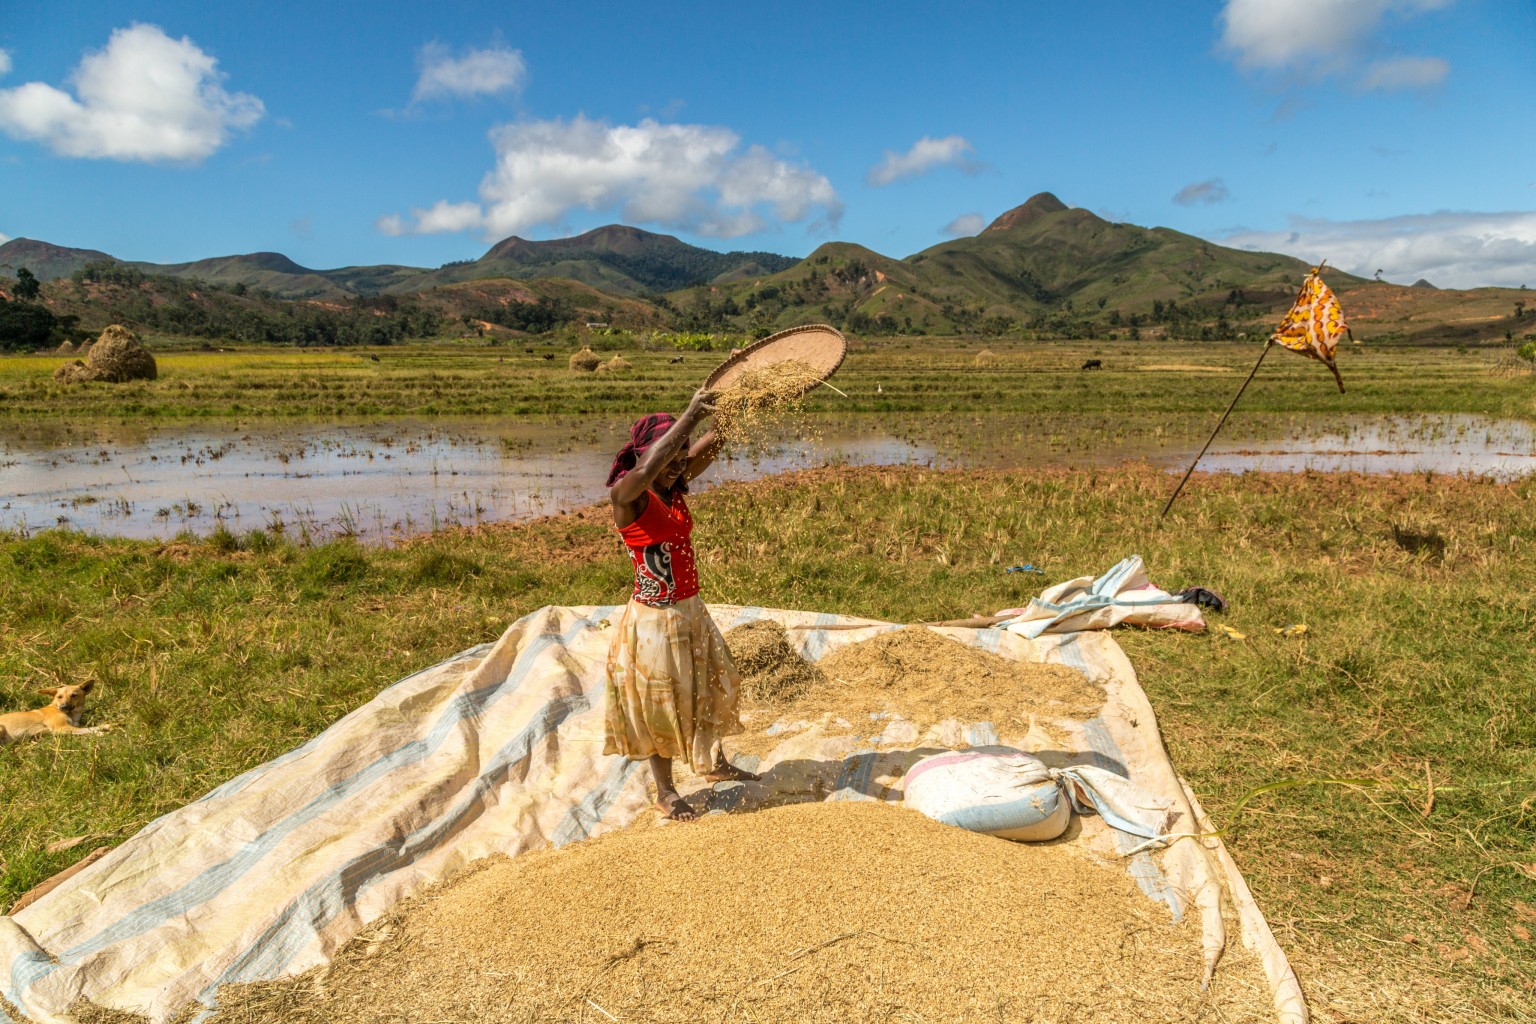 Rice farming in Madagascar